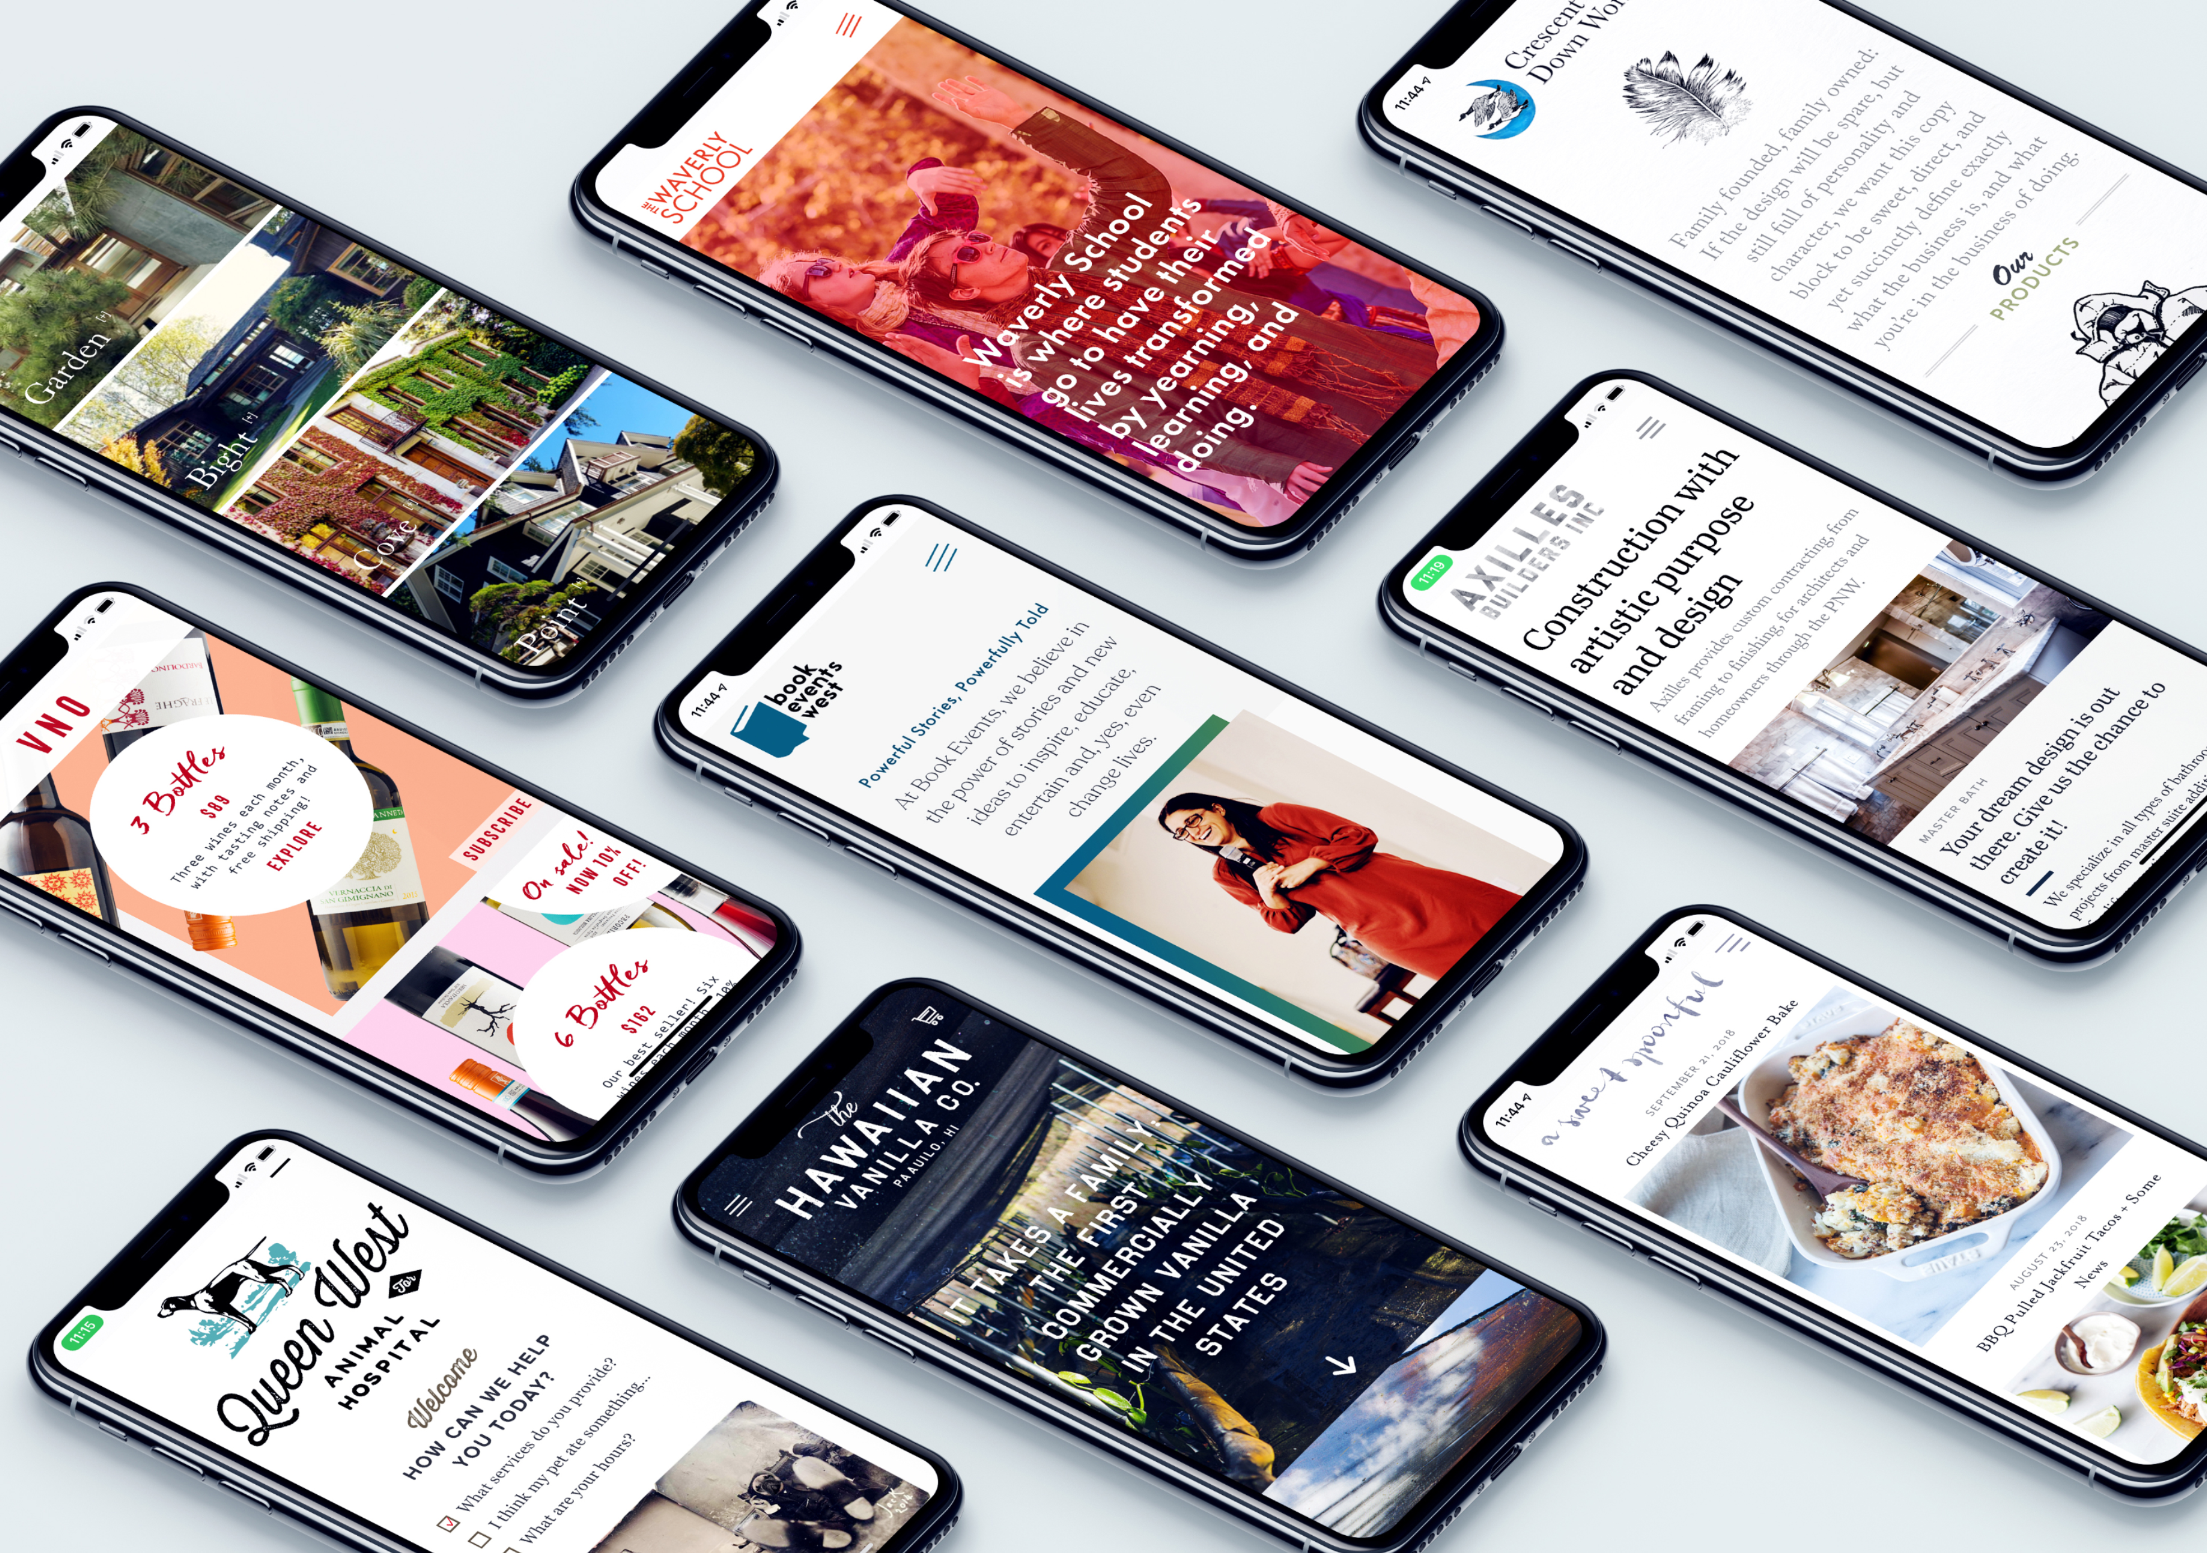 Many website designs displayed on iPhones